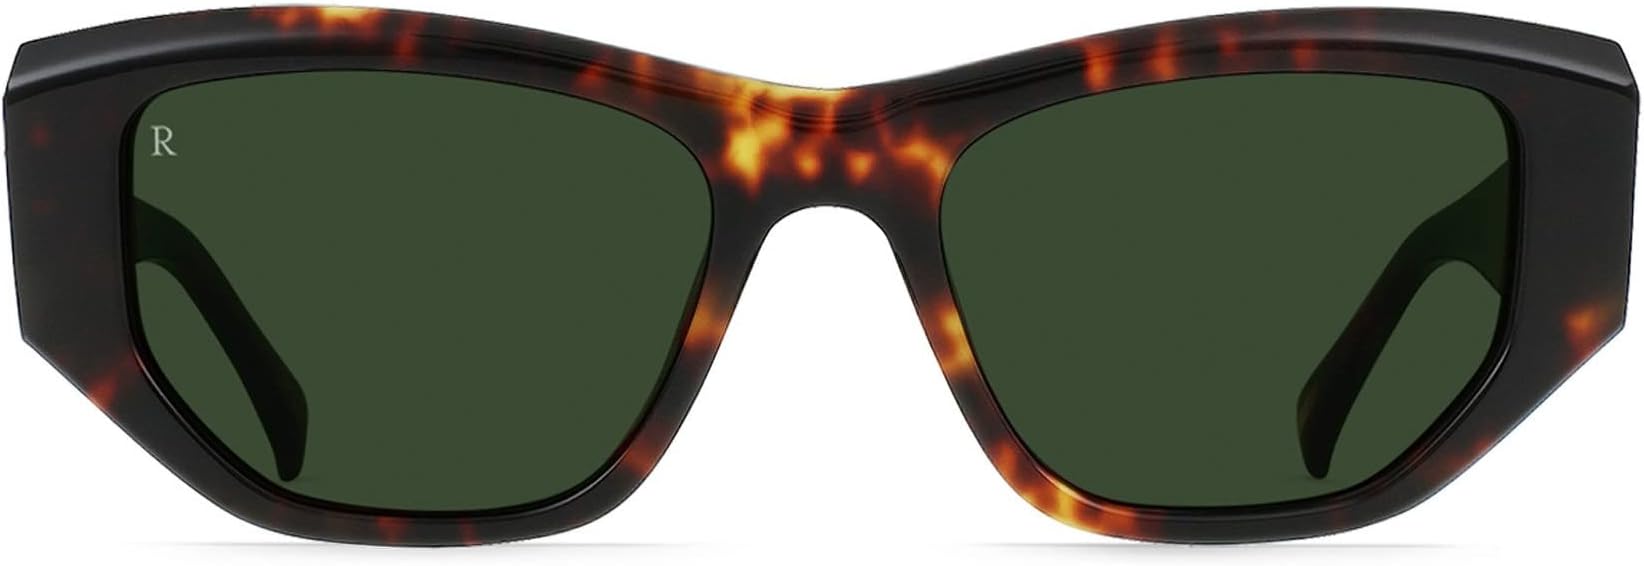 цена Солнцезащитные очки Ynez 54 RAEN Optics, цвет Ristretto Tortoise/Bottle Green